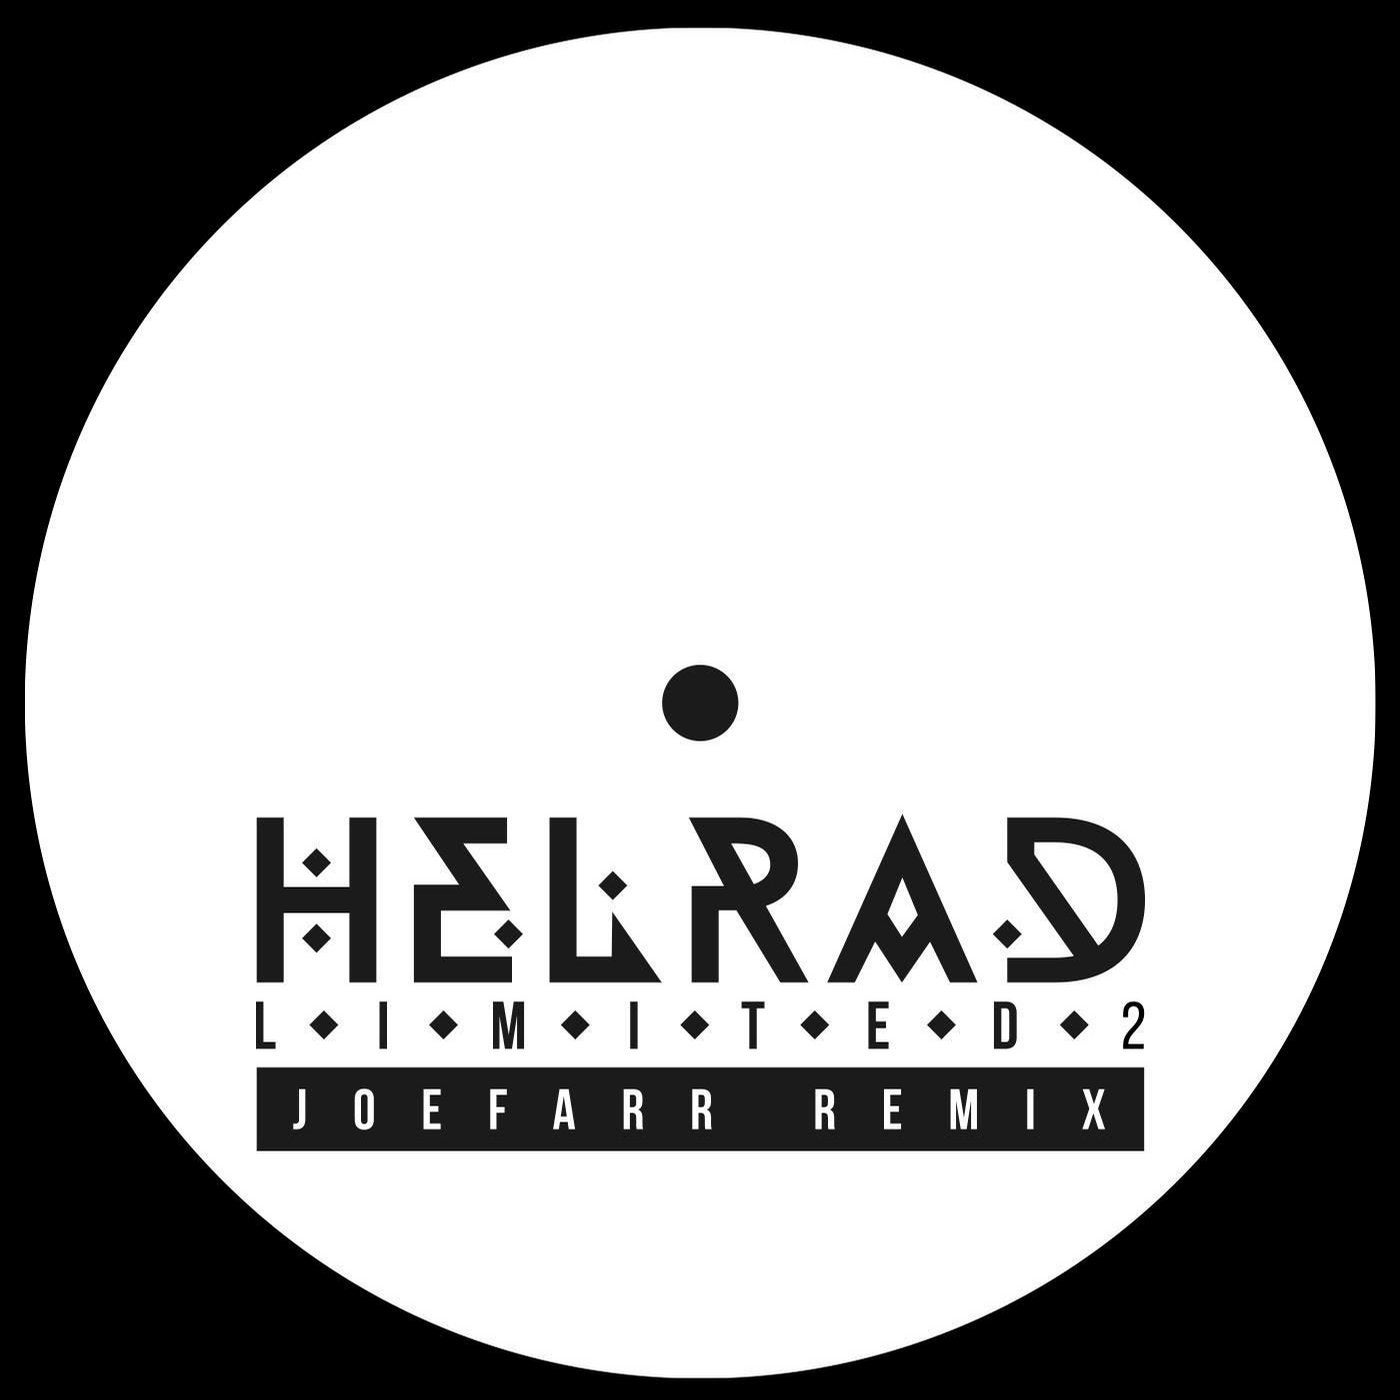 Helrad Limited 002